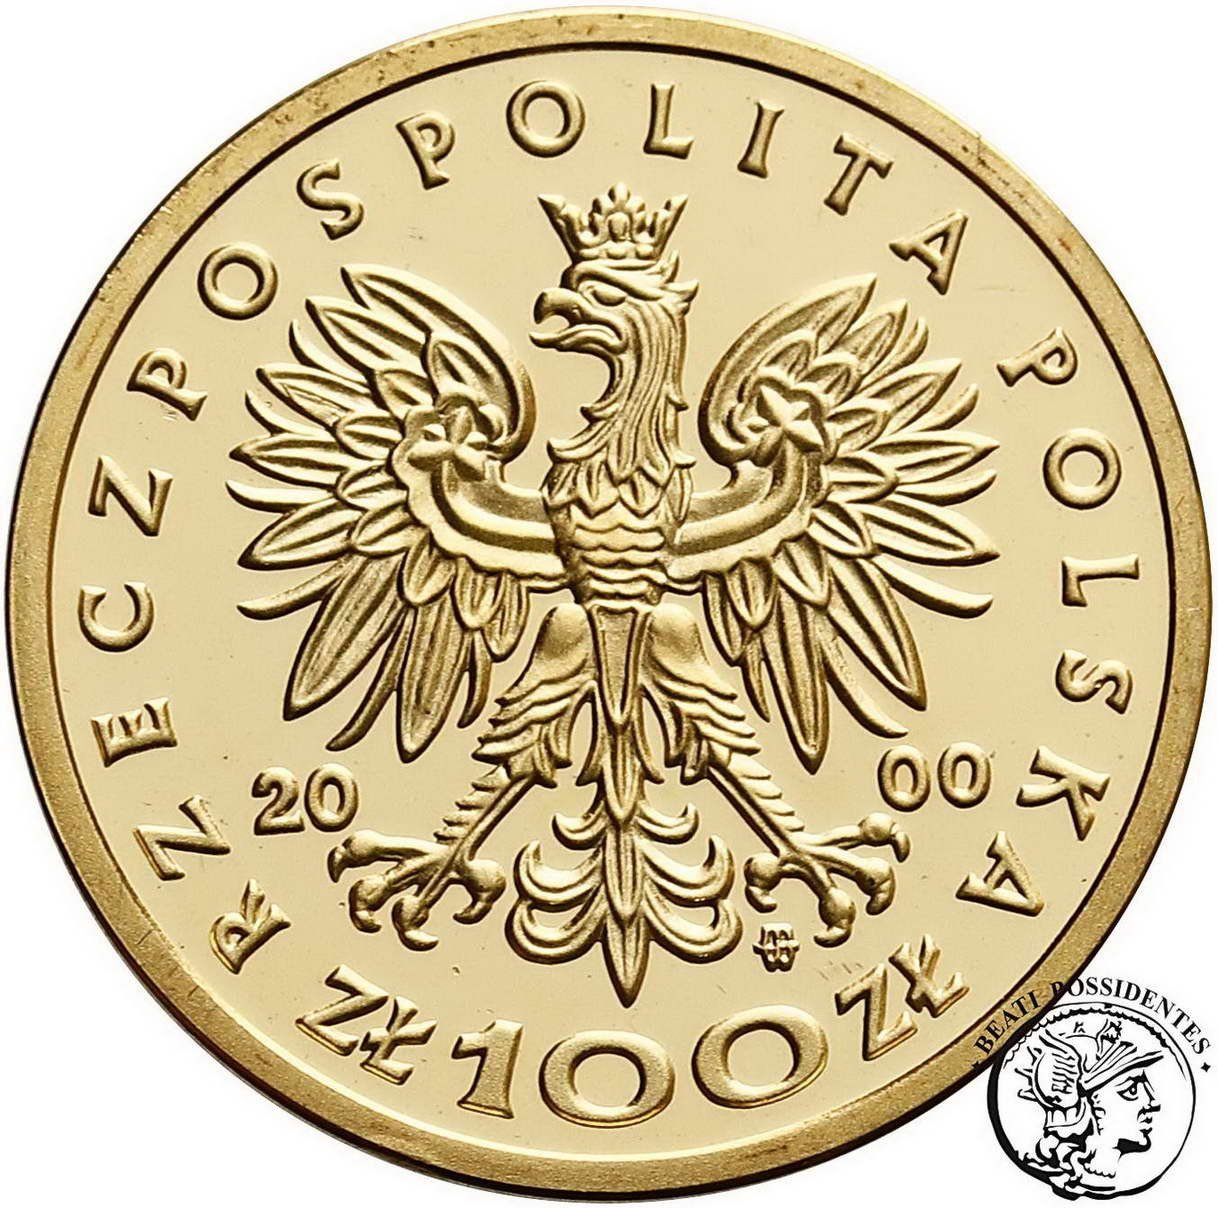 Polska III RP 100 złotych Królowa Jadwiga 2000 st. L-/L